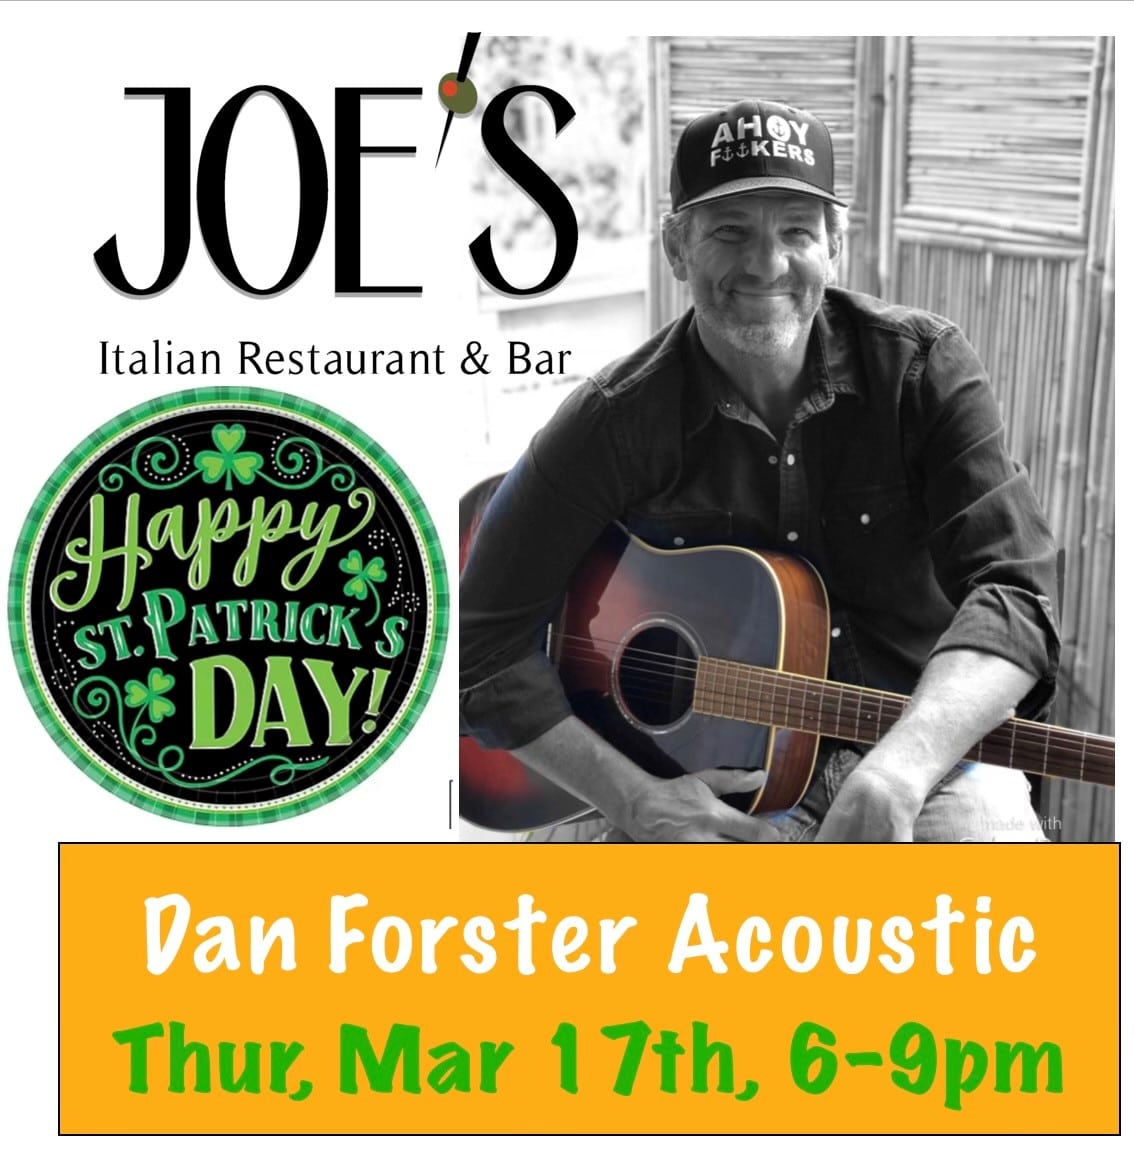 Live music at Joe's Italian Restaurant Dan Forster Acoustic